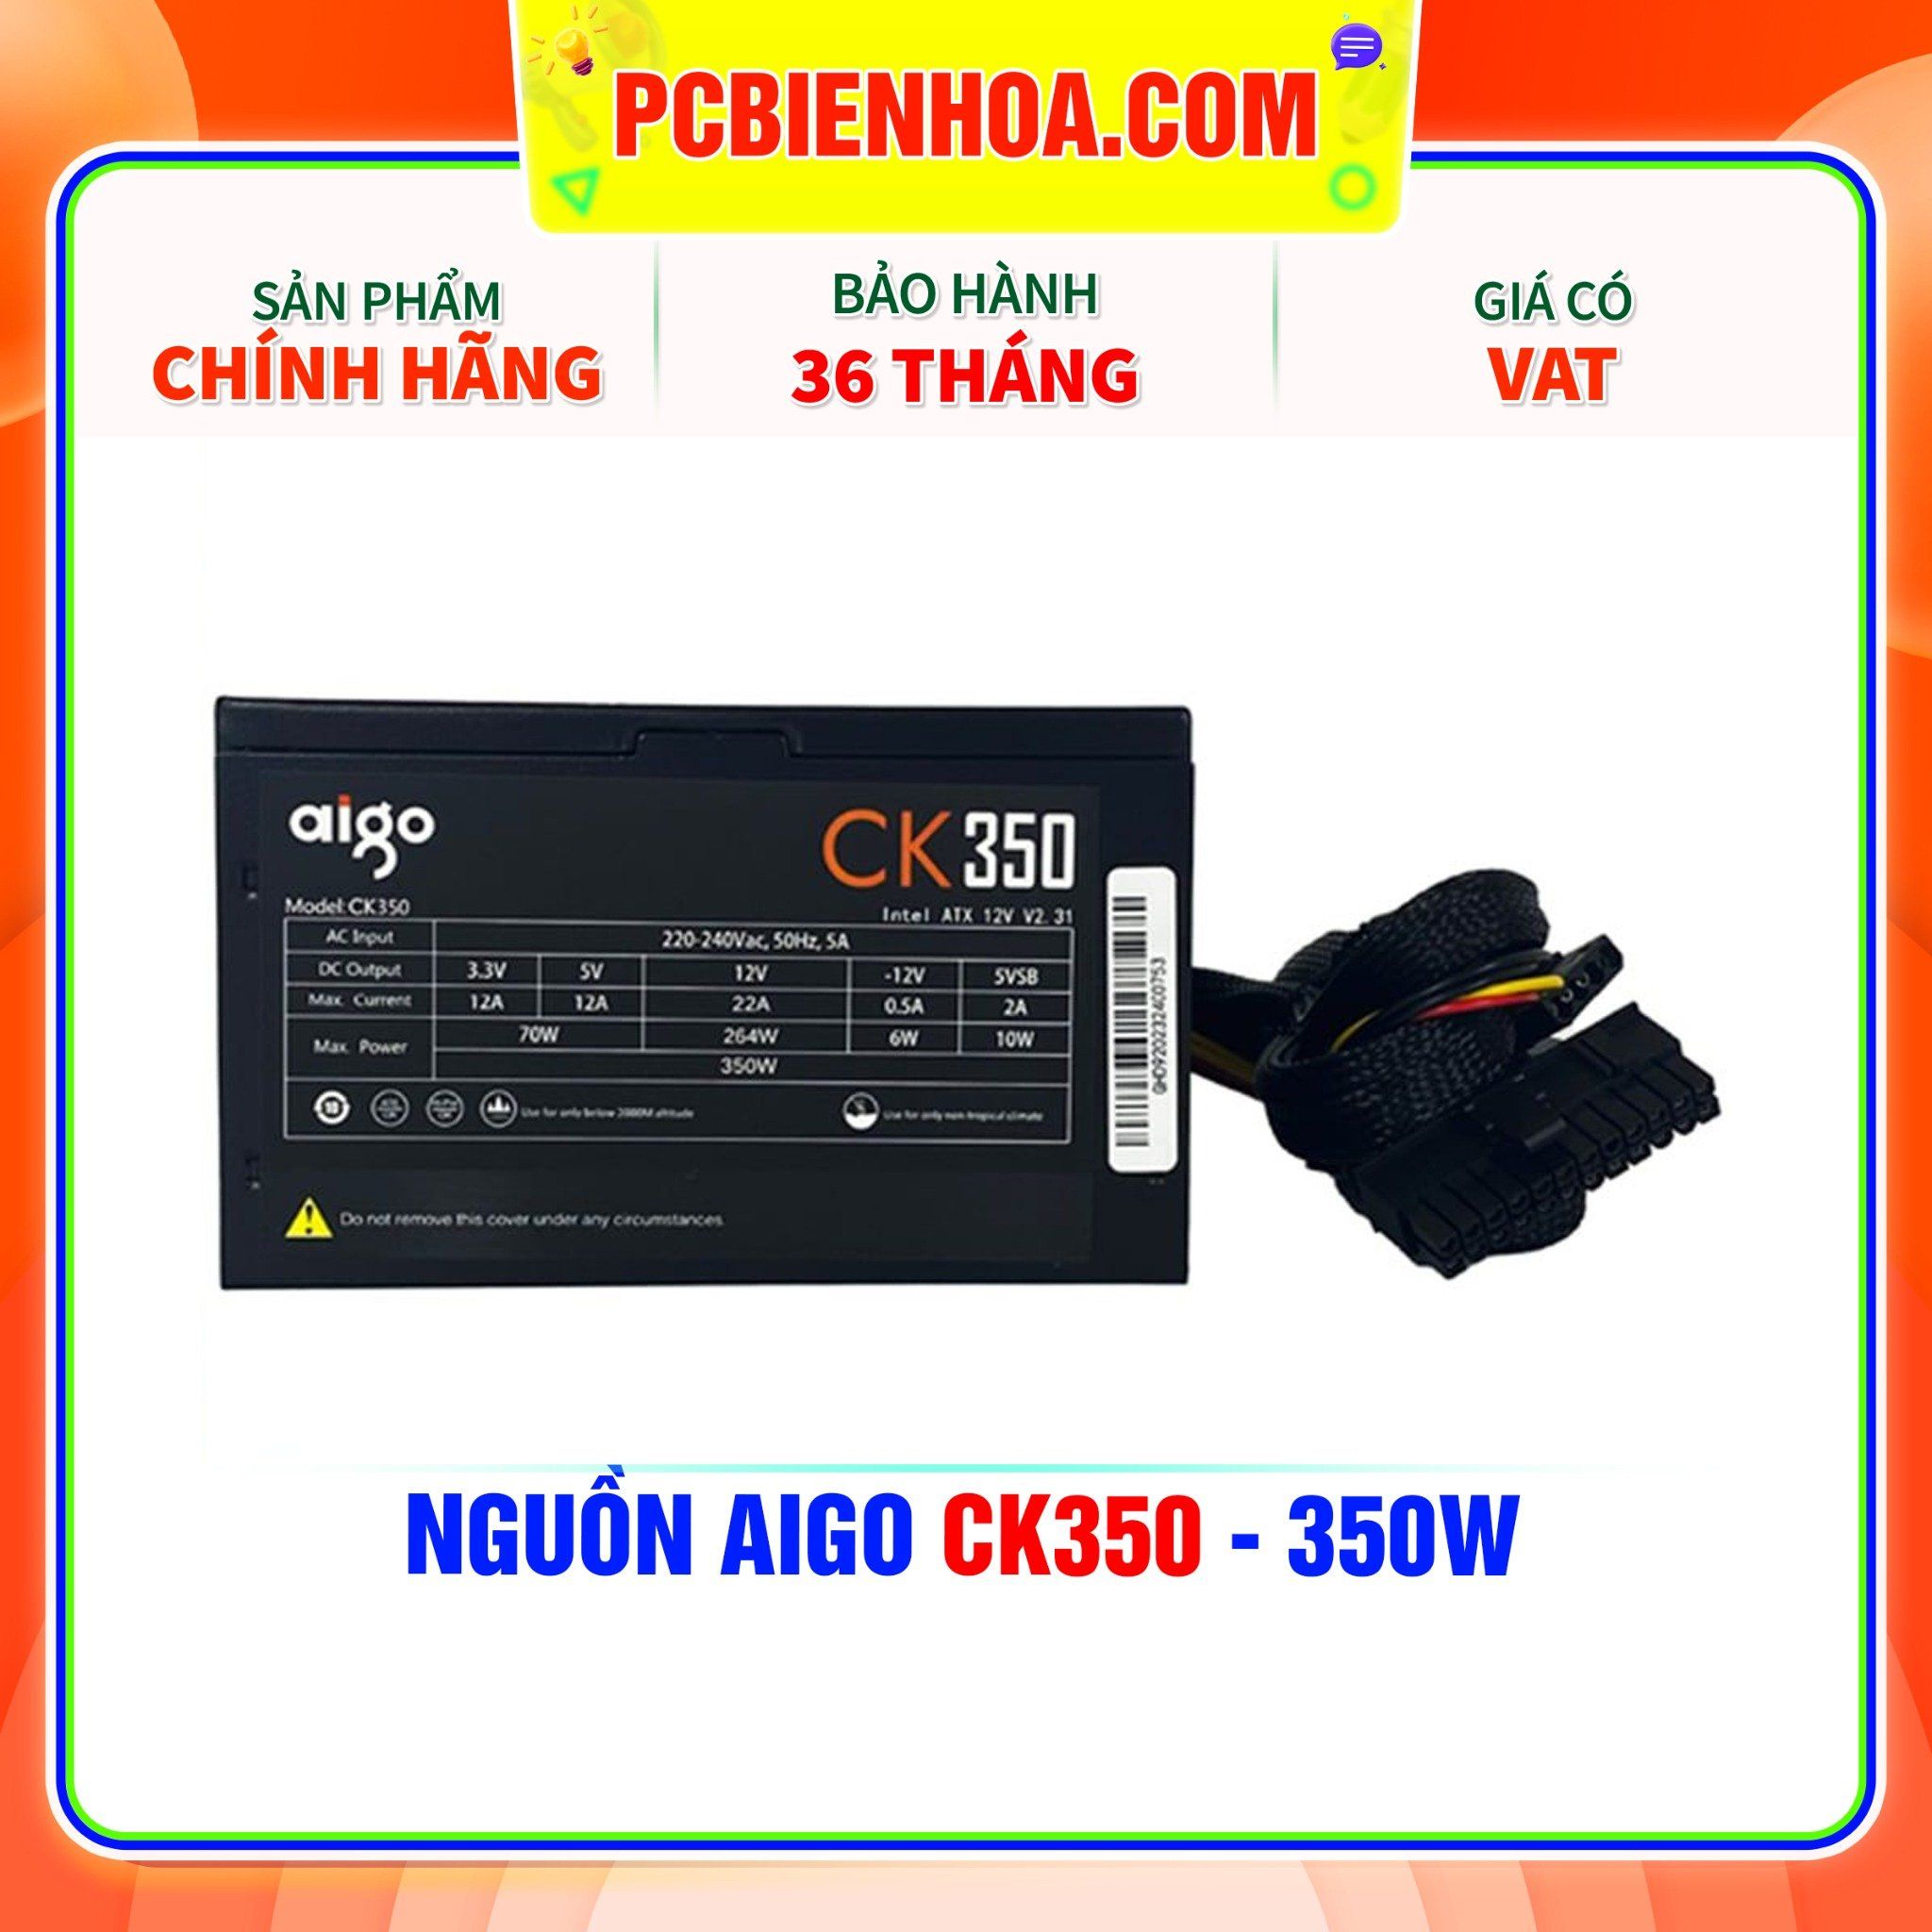  NGUỒN AIGO CK350 - 350W 